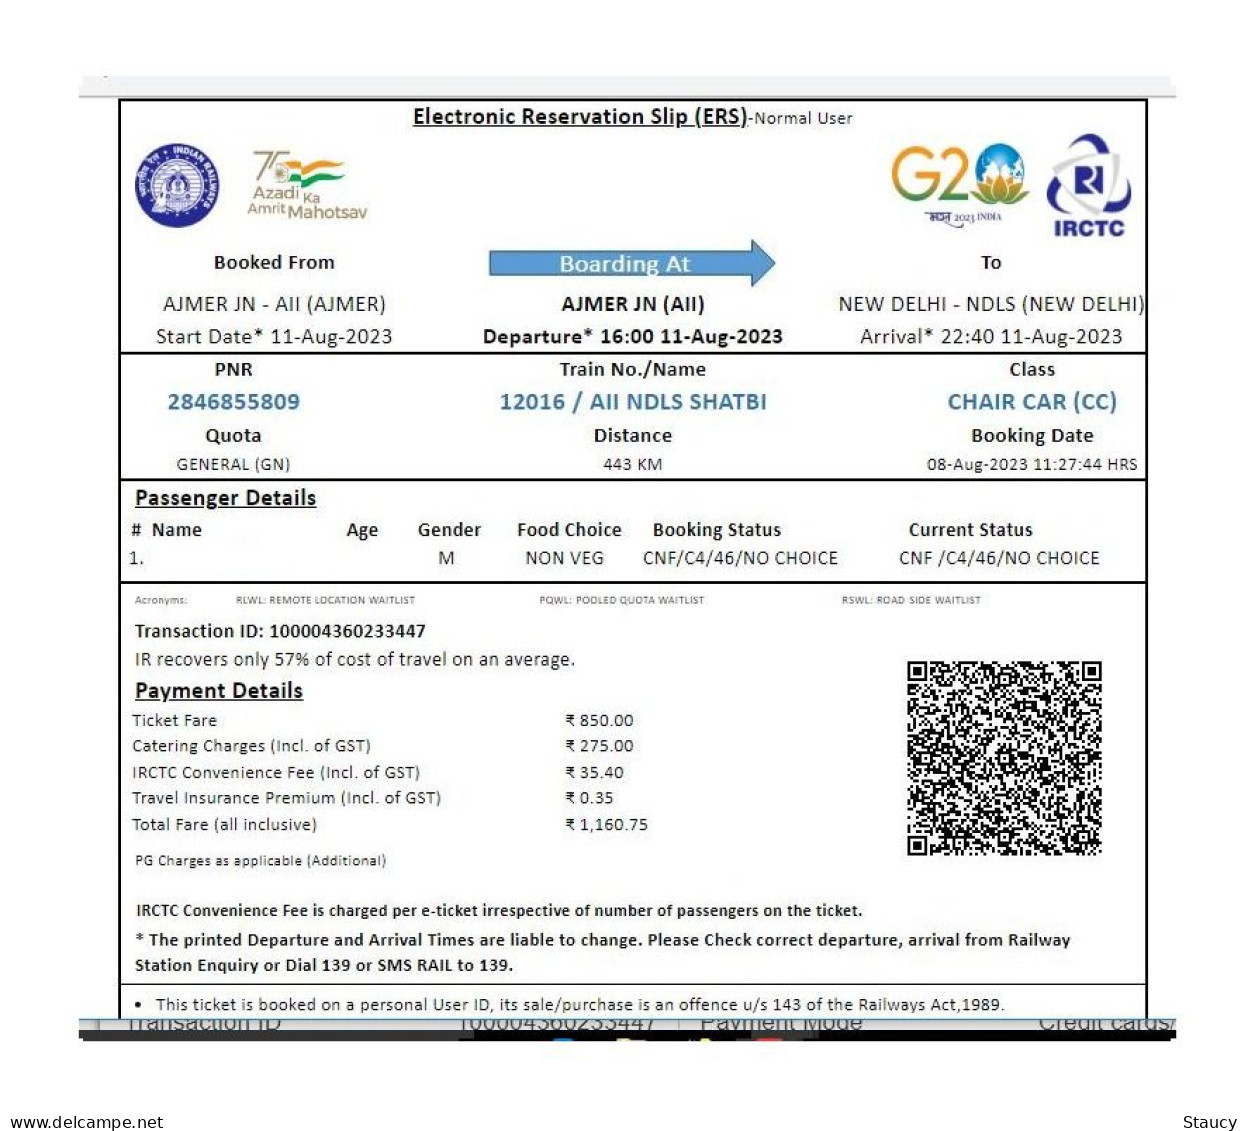 India Railway / Train Ticket With LOGO's Of INDIAN RAILWAYS, IRCTC, G-20 Summit, Azadi Ka Amrit Mahotsav As Per Scan - World